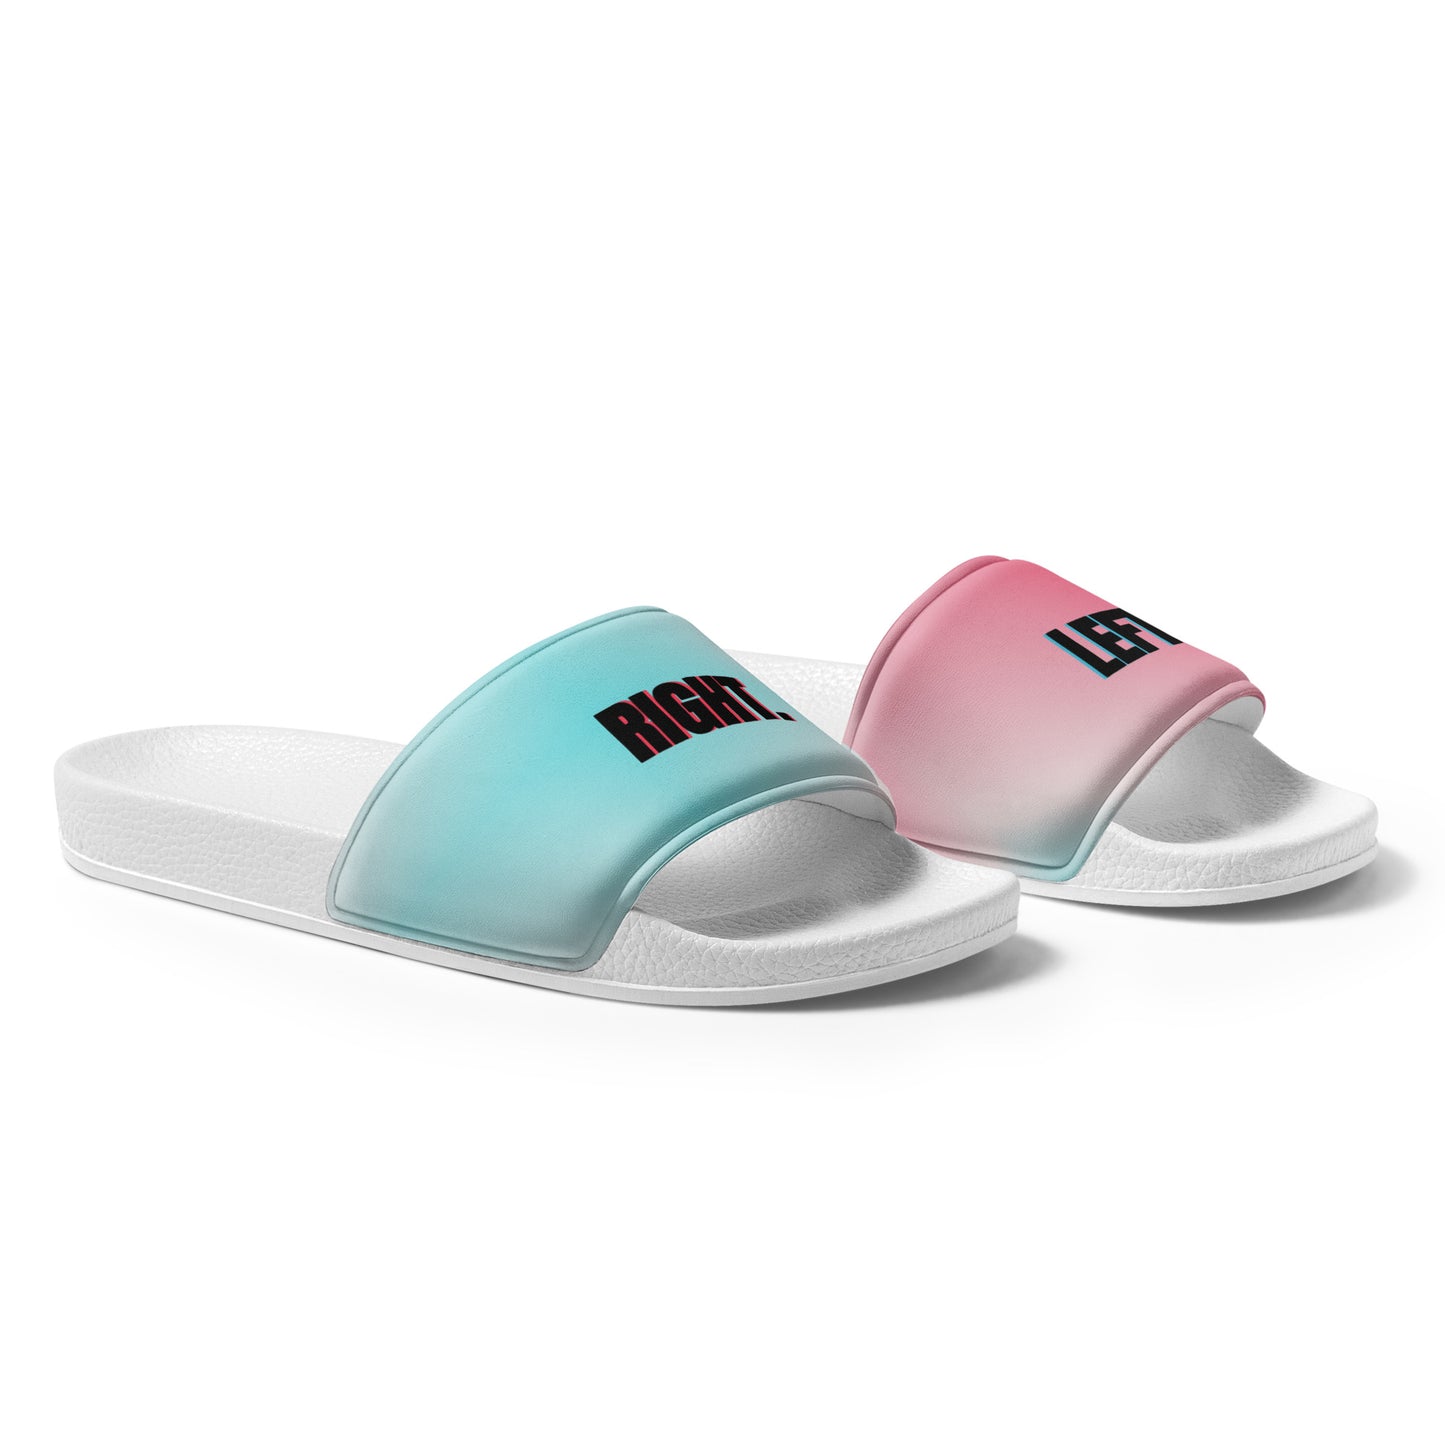 #bluecatmax Men's Slides Comfortable Contoured Footbed 7-12.5